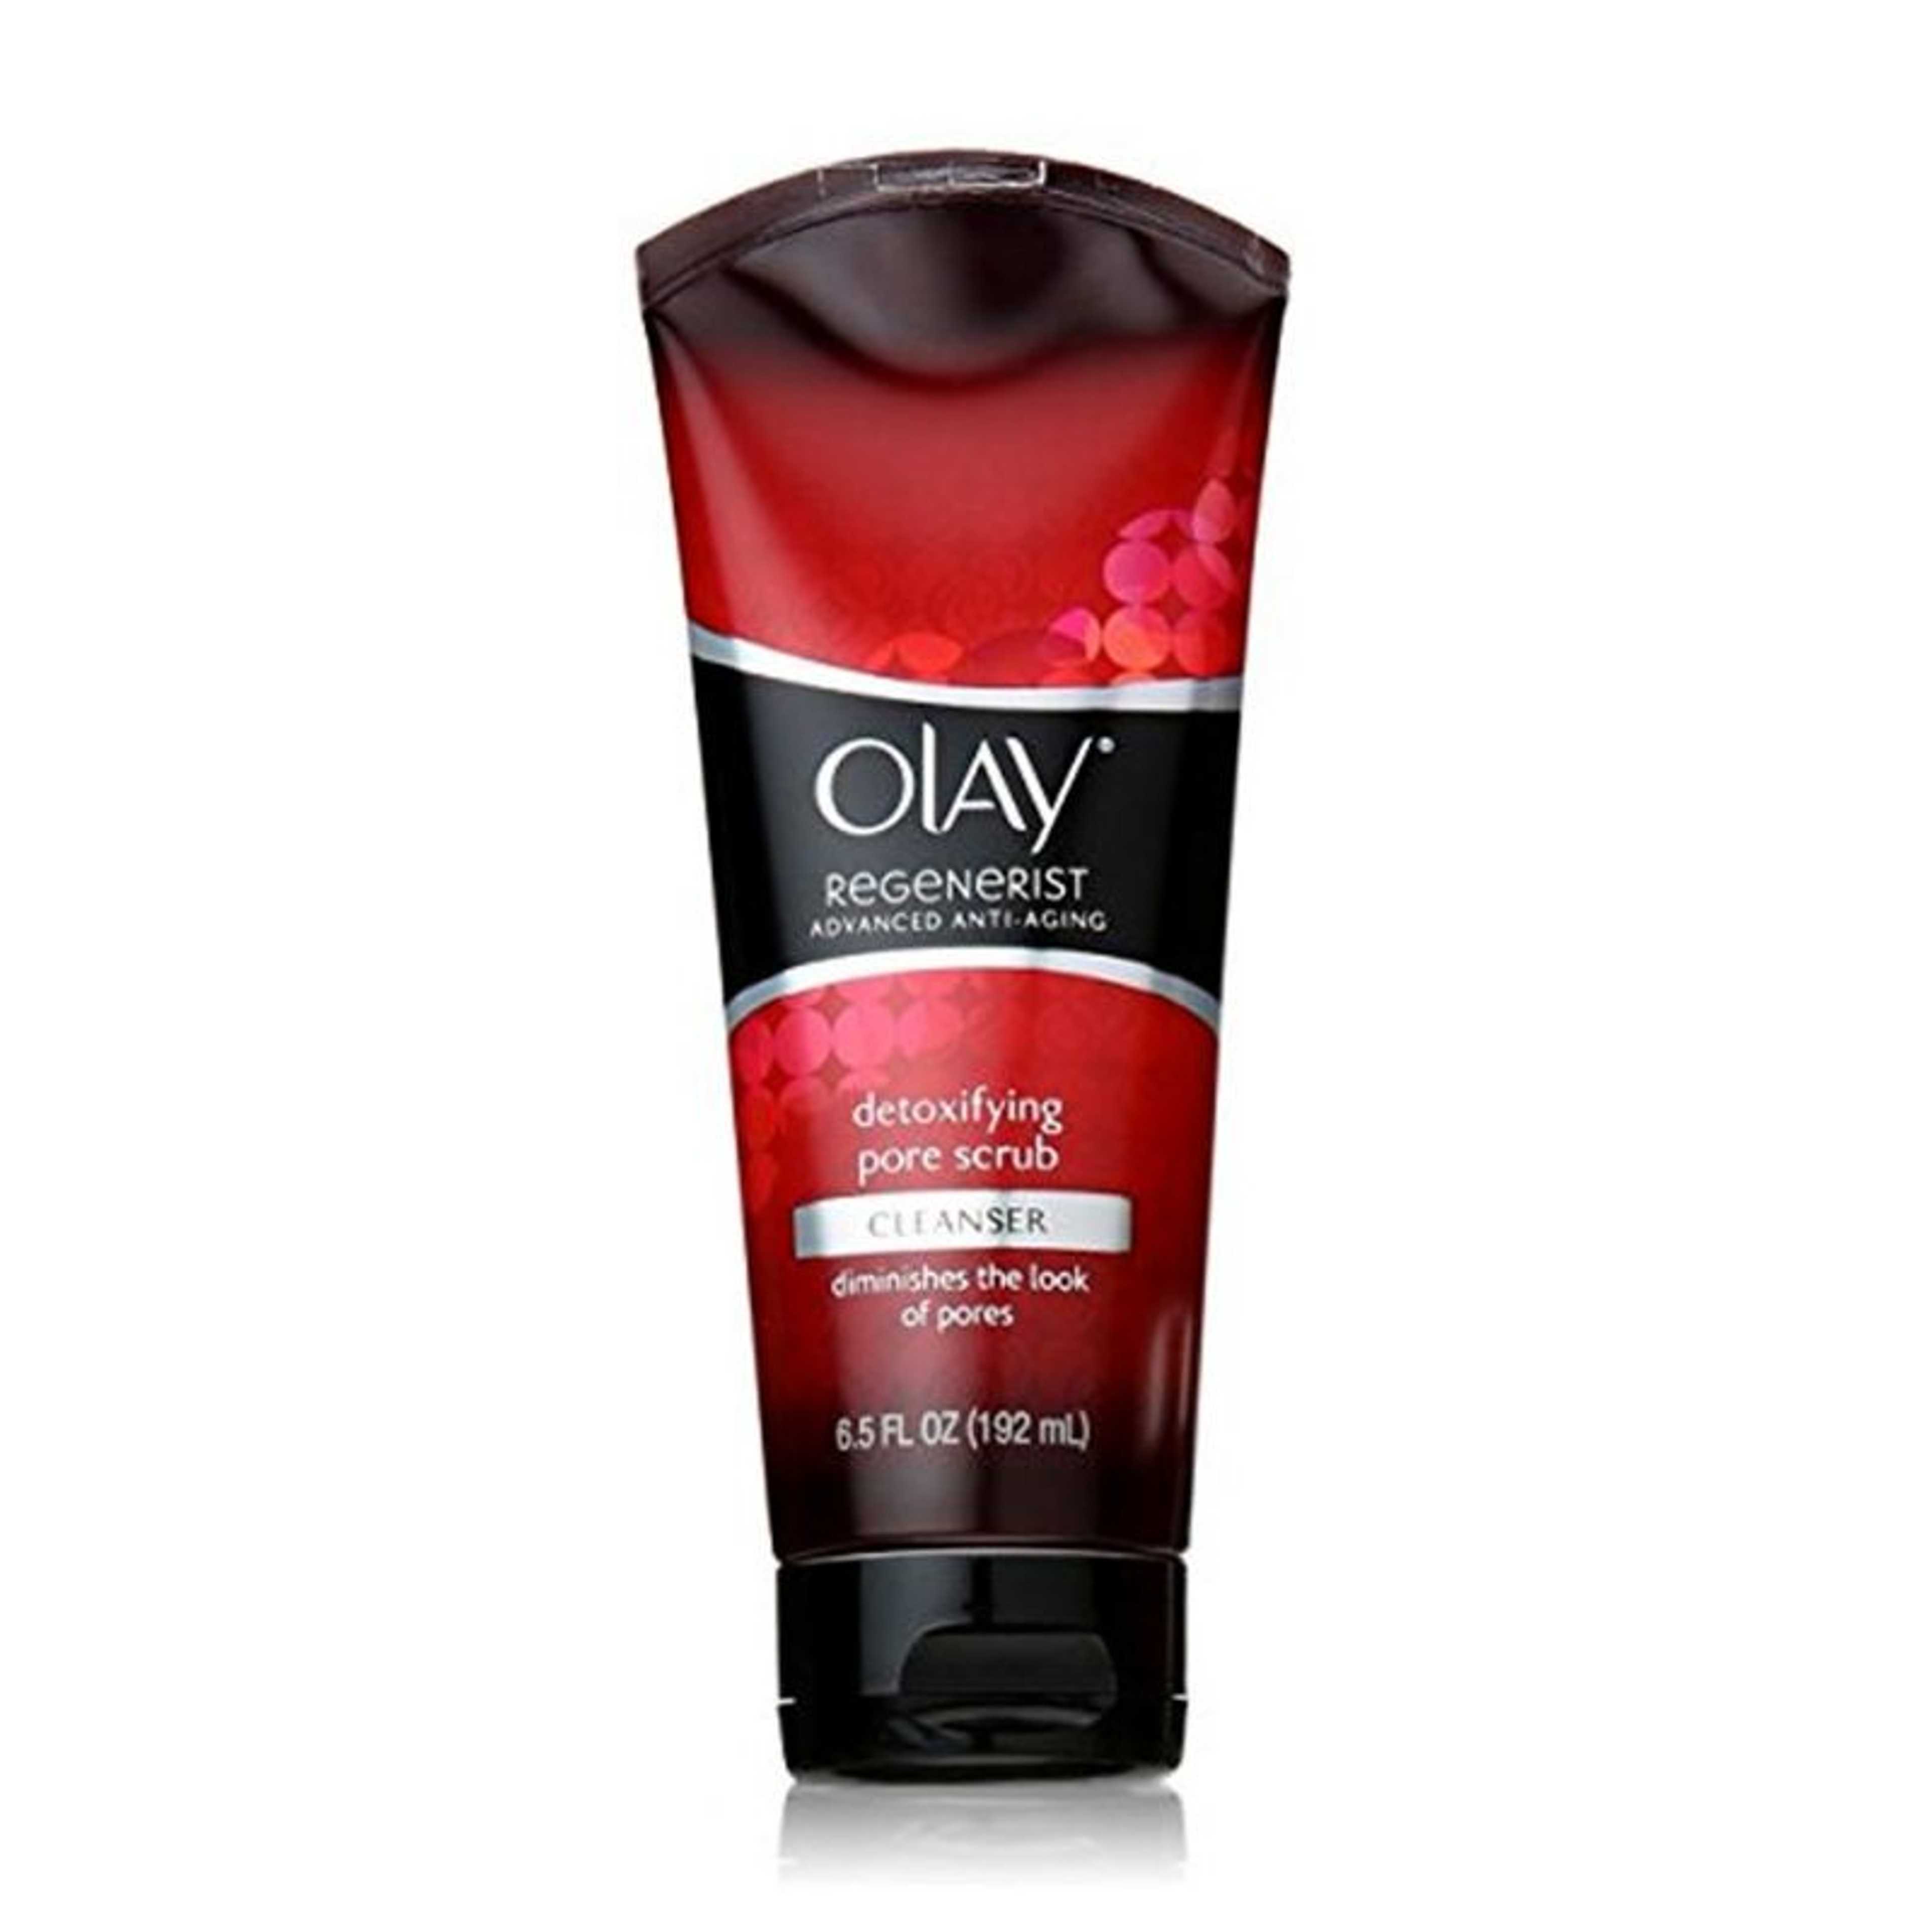 Olay Regenerist Detoxifying Pore Scrub Cleanser 6.5 oz.